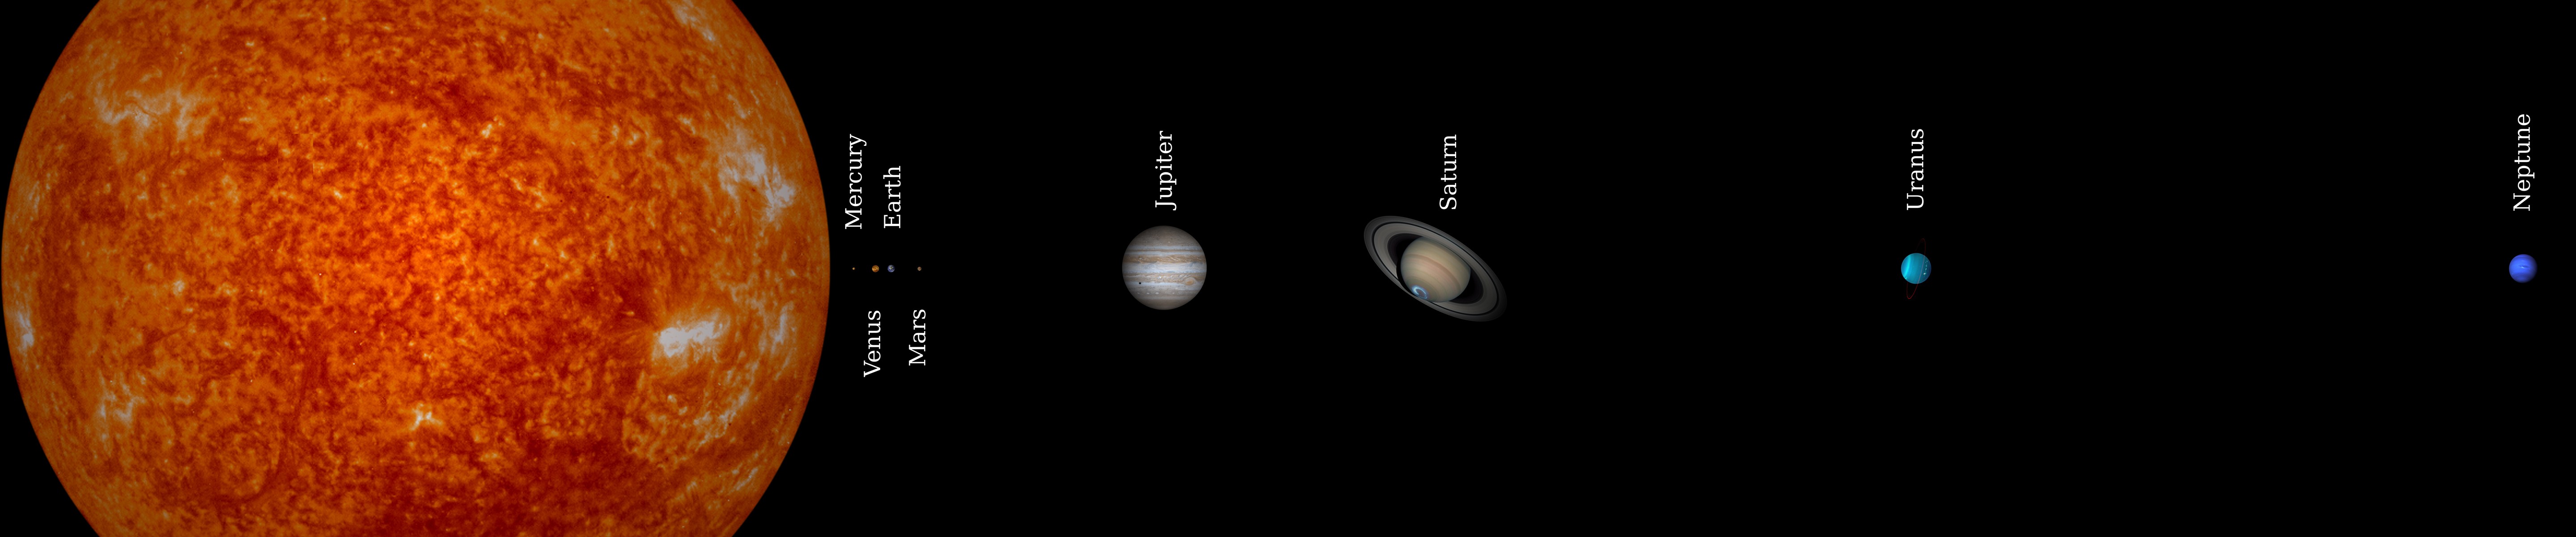 Space Solar System Planet Sun Mercury Venus Earth Mars Jupiter Saturn Uranus Neptune Simple Backgrou 5760x1200